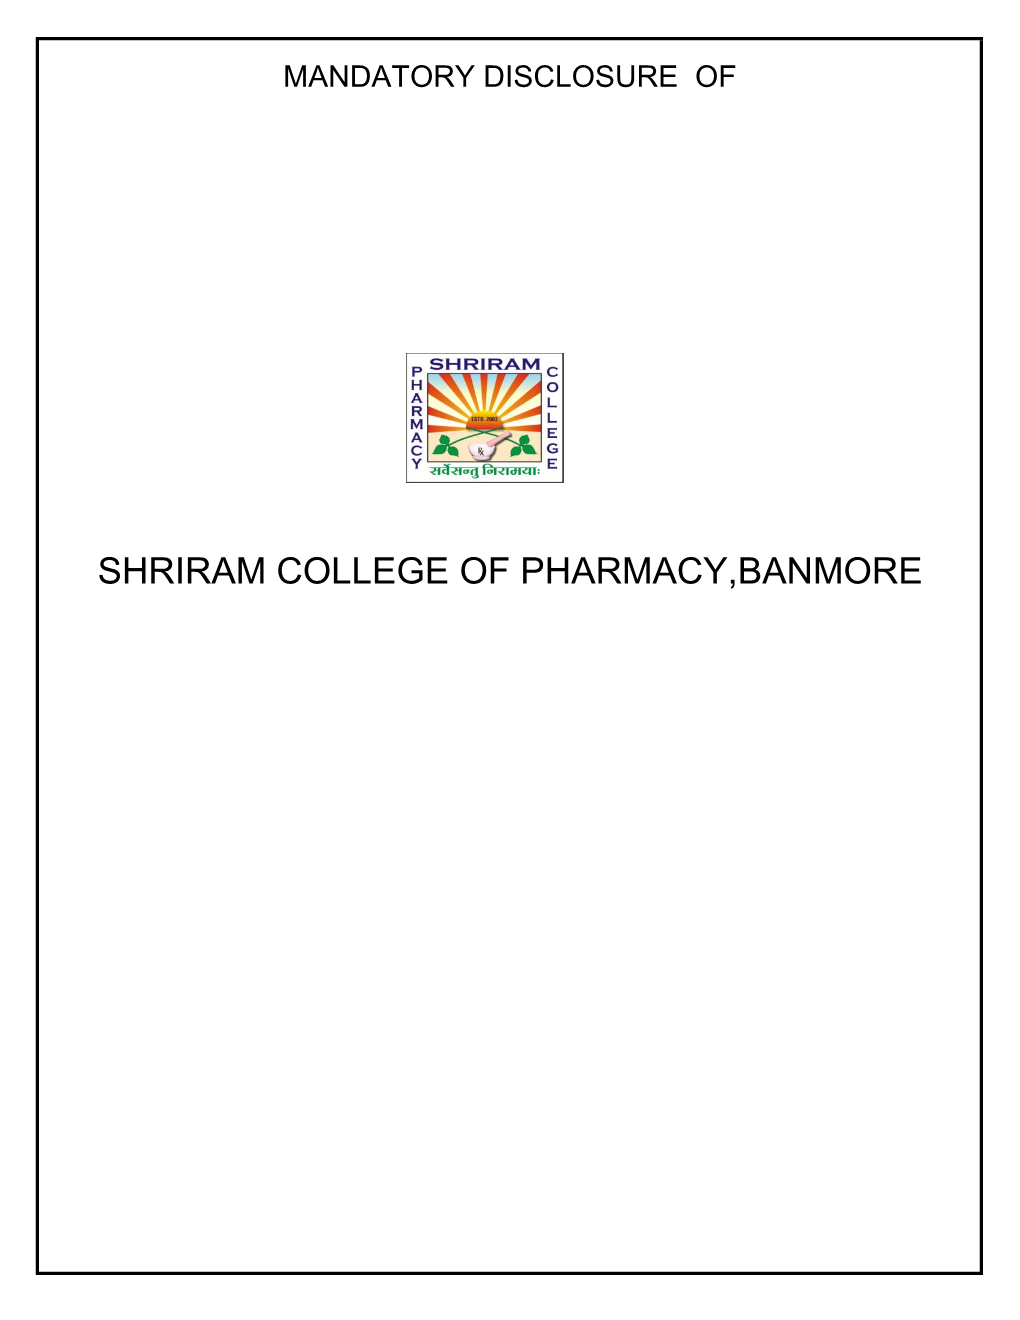 SHRIRAM COLLEGE of PHARMACY,BANMORE Appendix 10